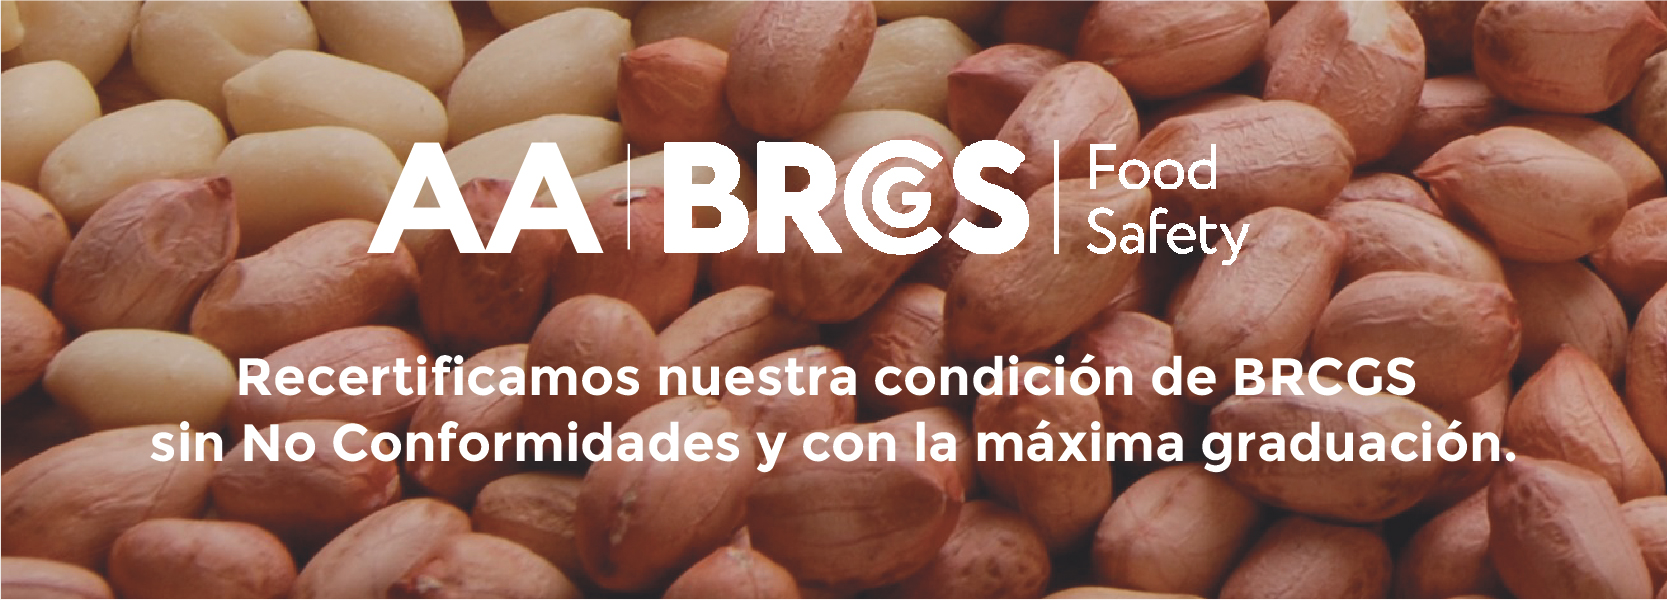 AA – BRCGS – Food Safety